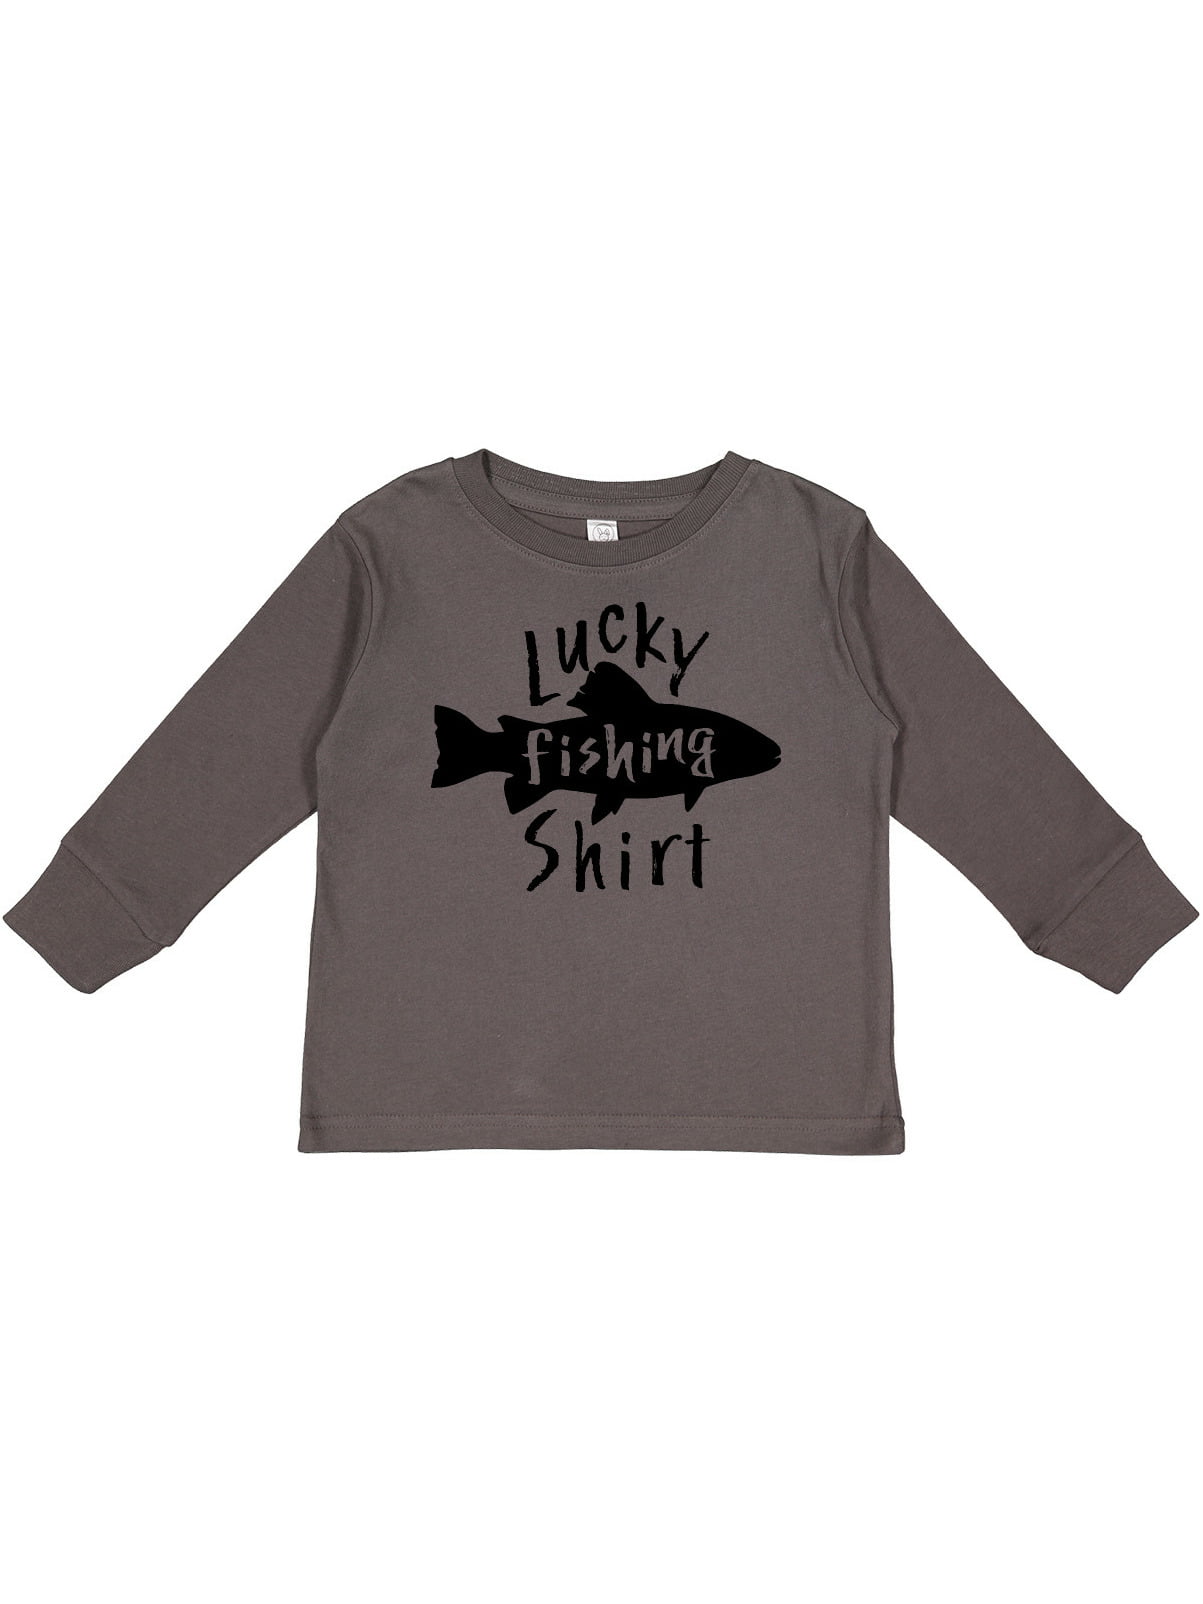 Girls Toddler - Youth Fishing Performance Shirts 6m - L12/14